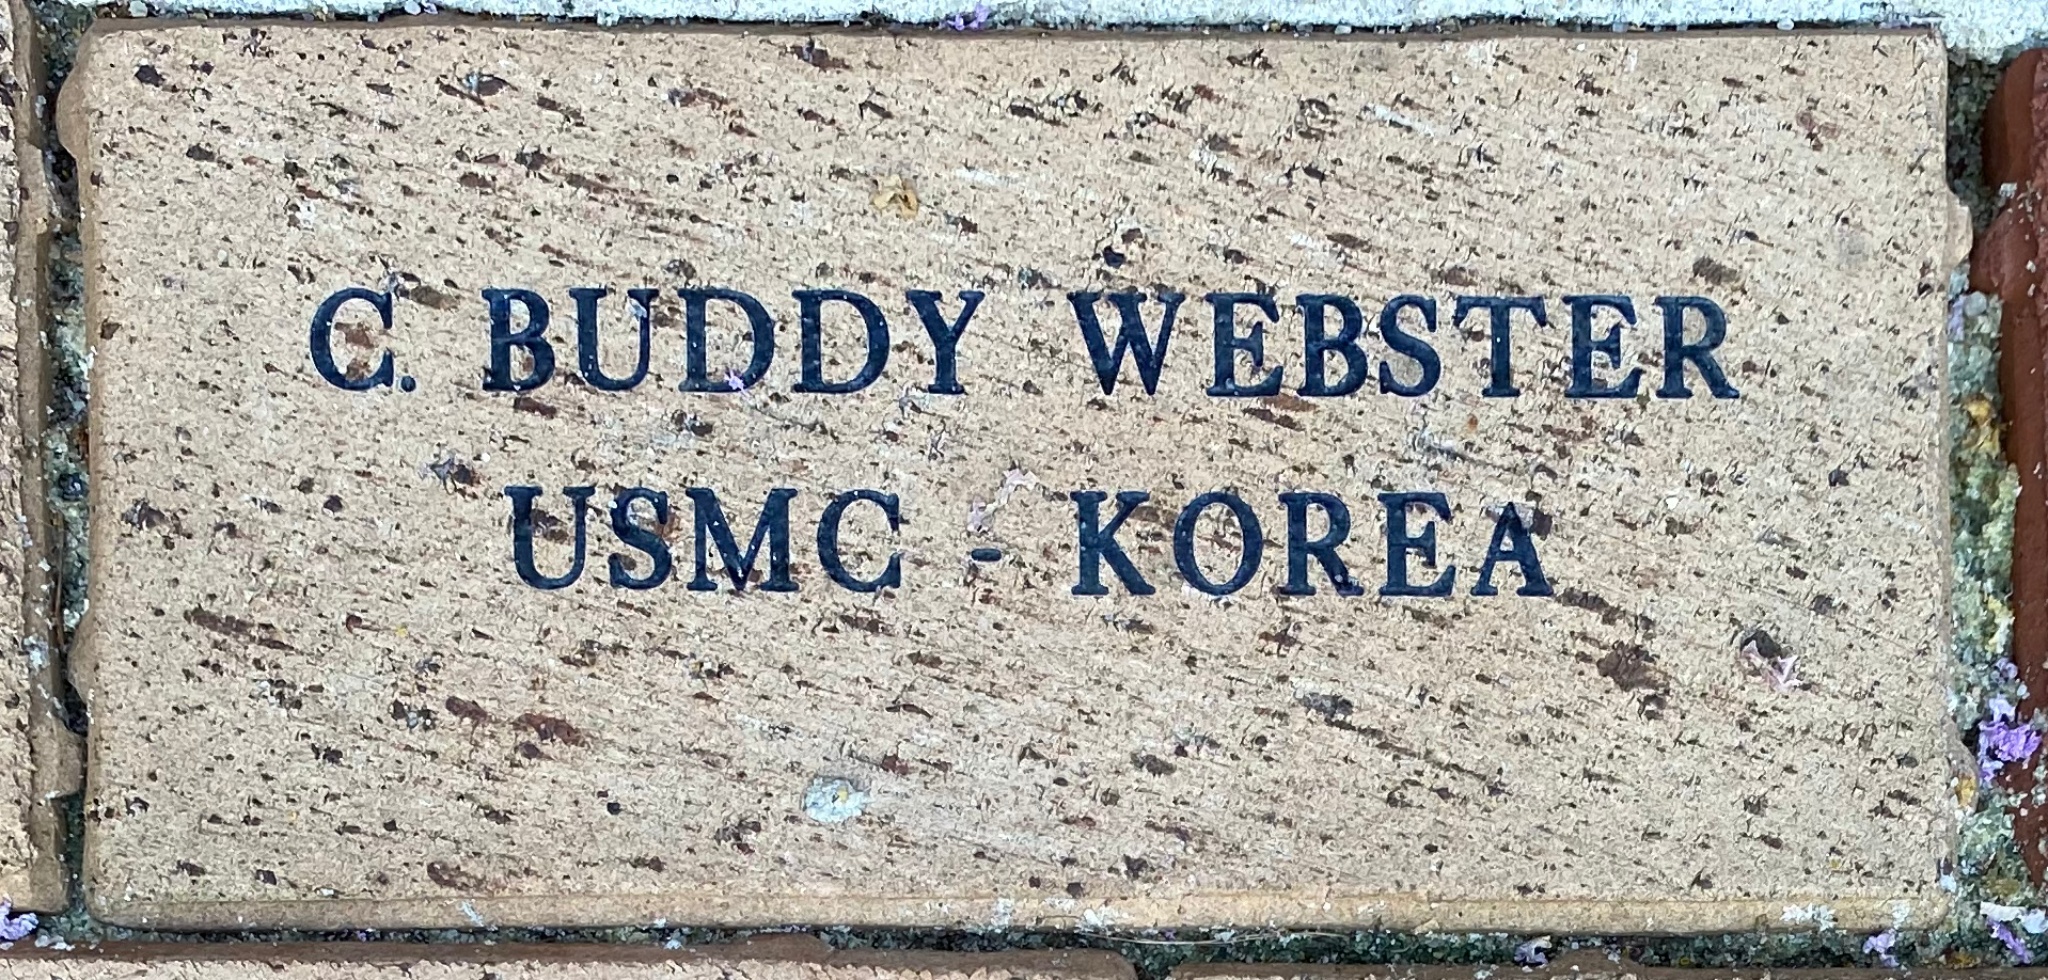 C. BUDDY WEBSTER USMC  KOREA